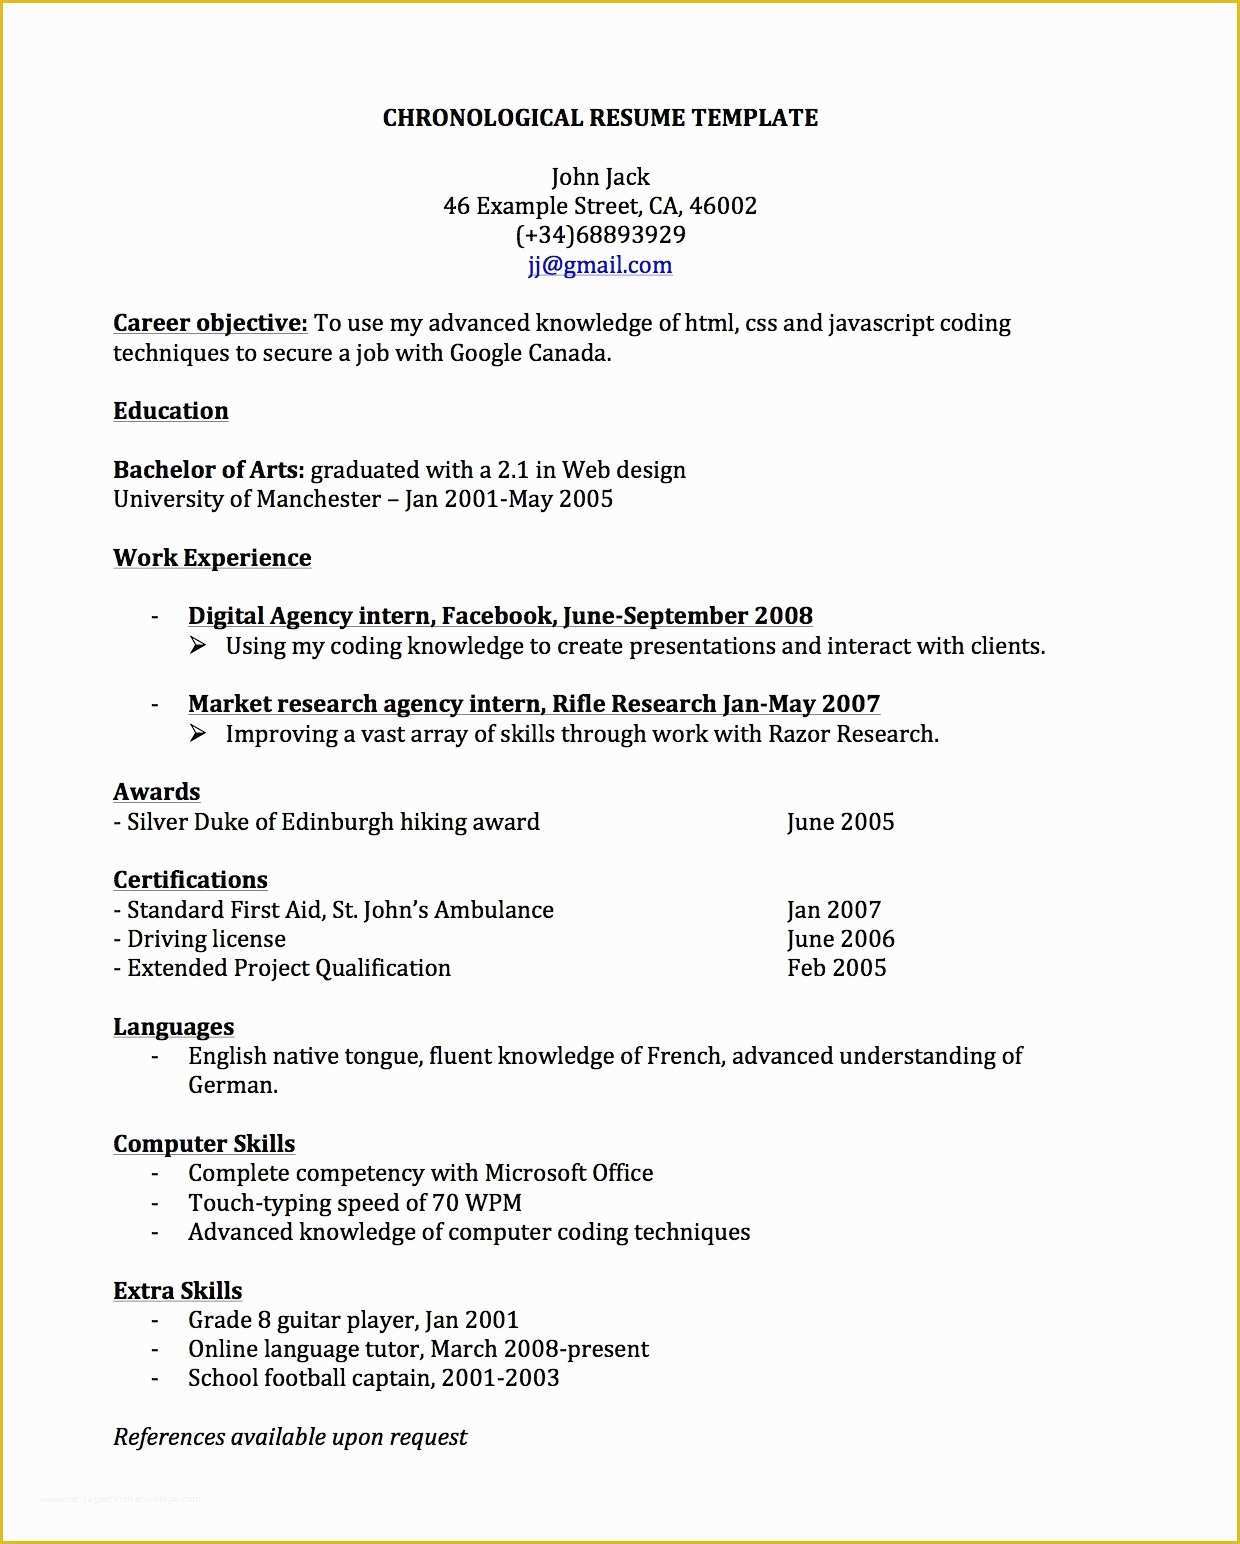 service canada resume template